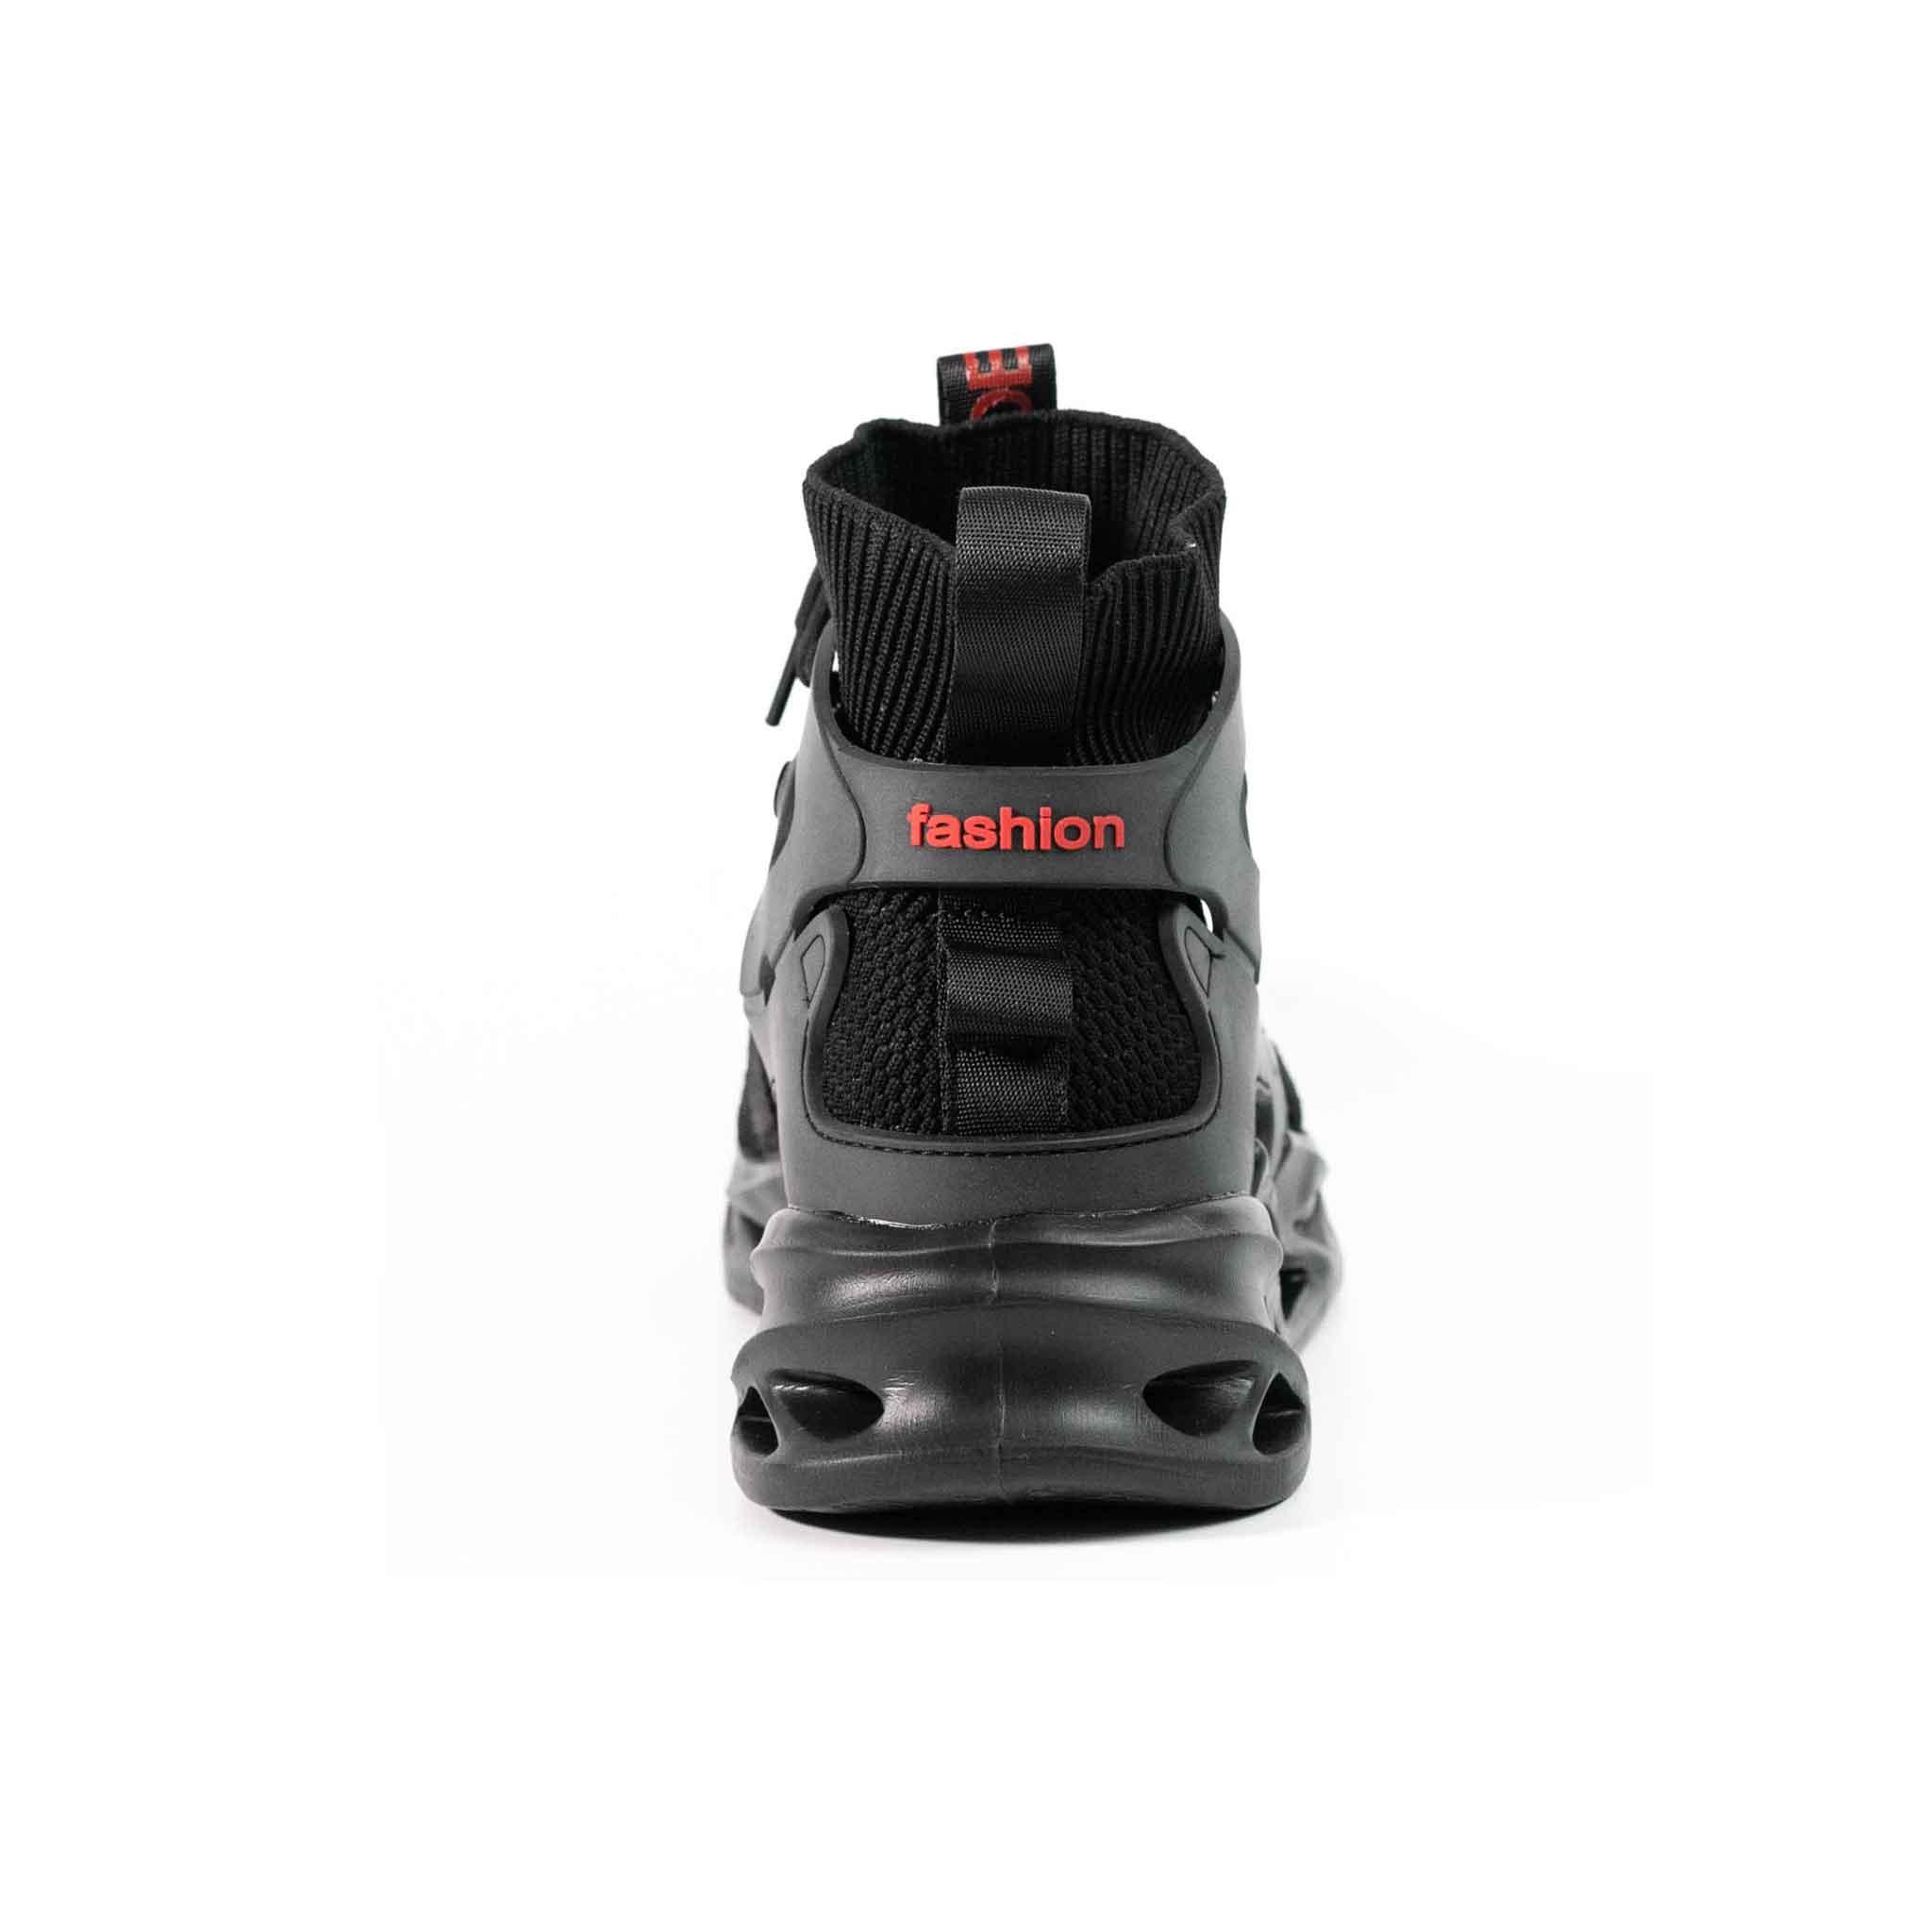 USINE PRO Men's Steel Toe Boots Stylish Lightweight & EH Safety | B007